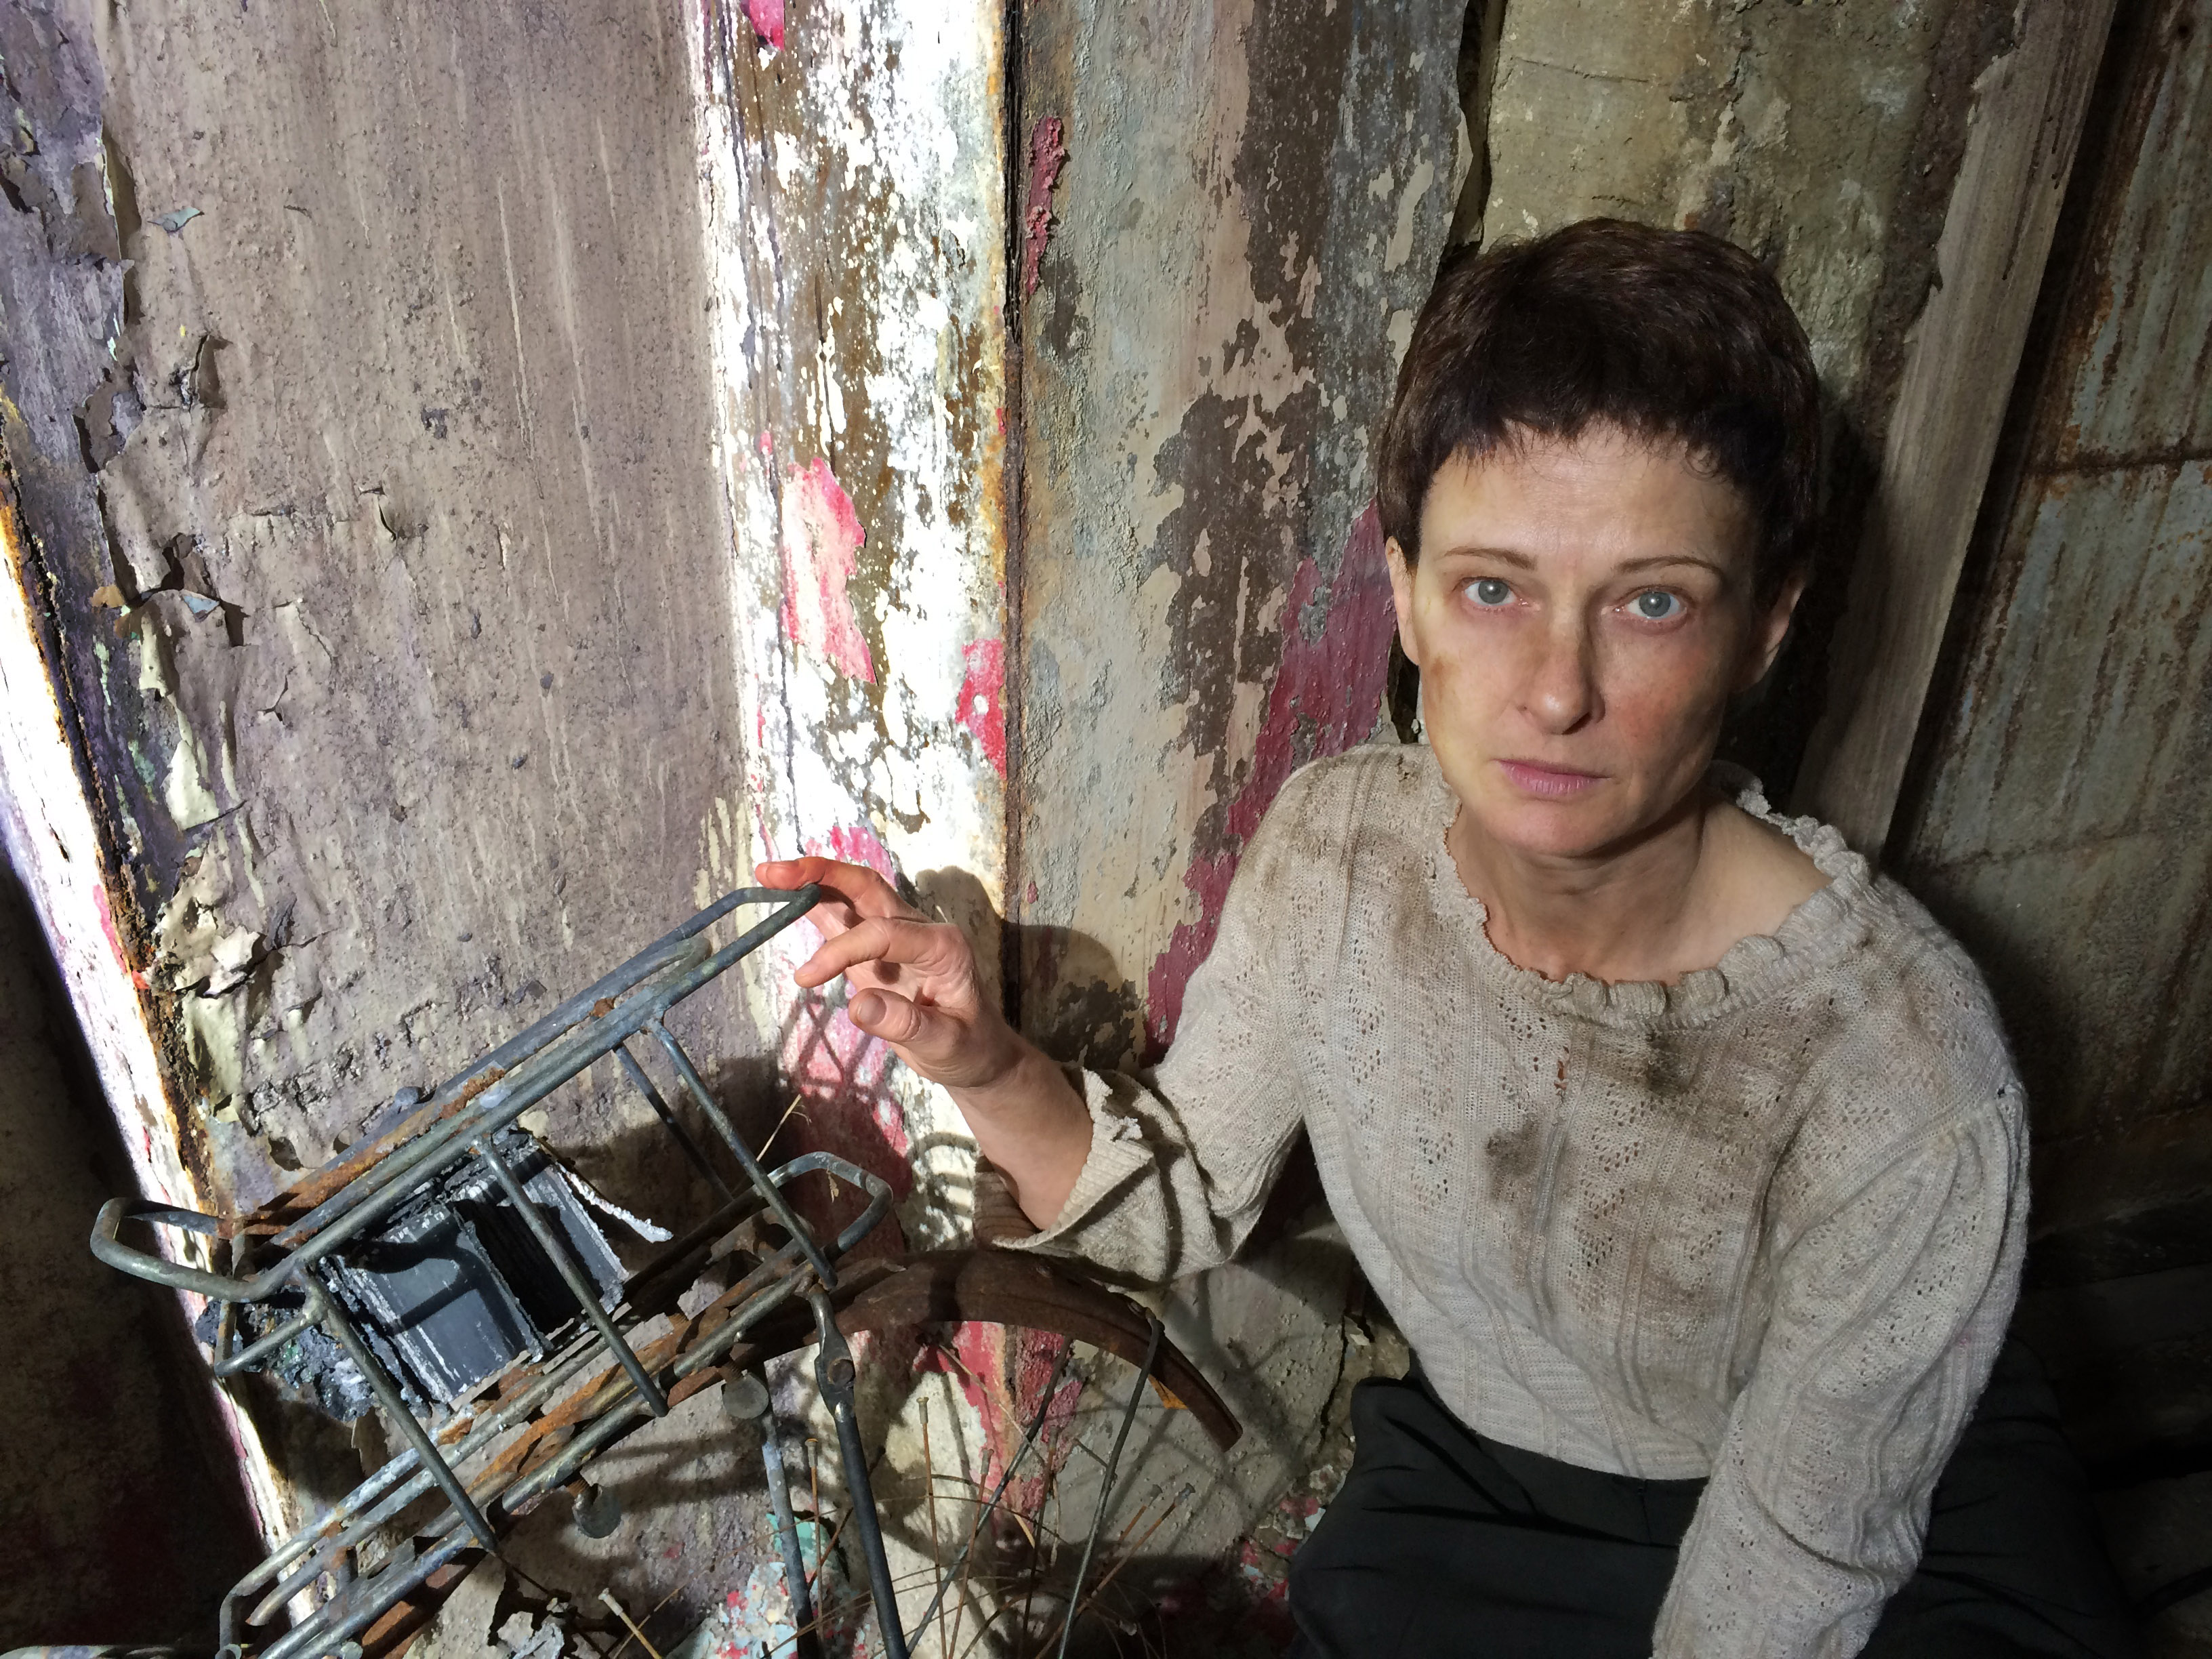 Beata Pozniak playing a Holocaust survivor in a 2015 experimental film 